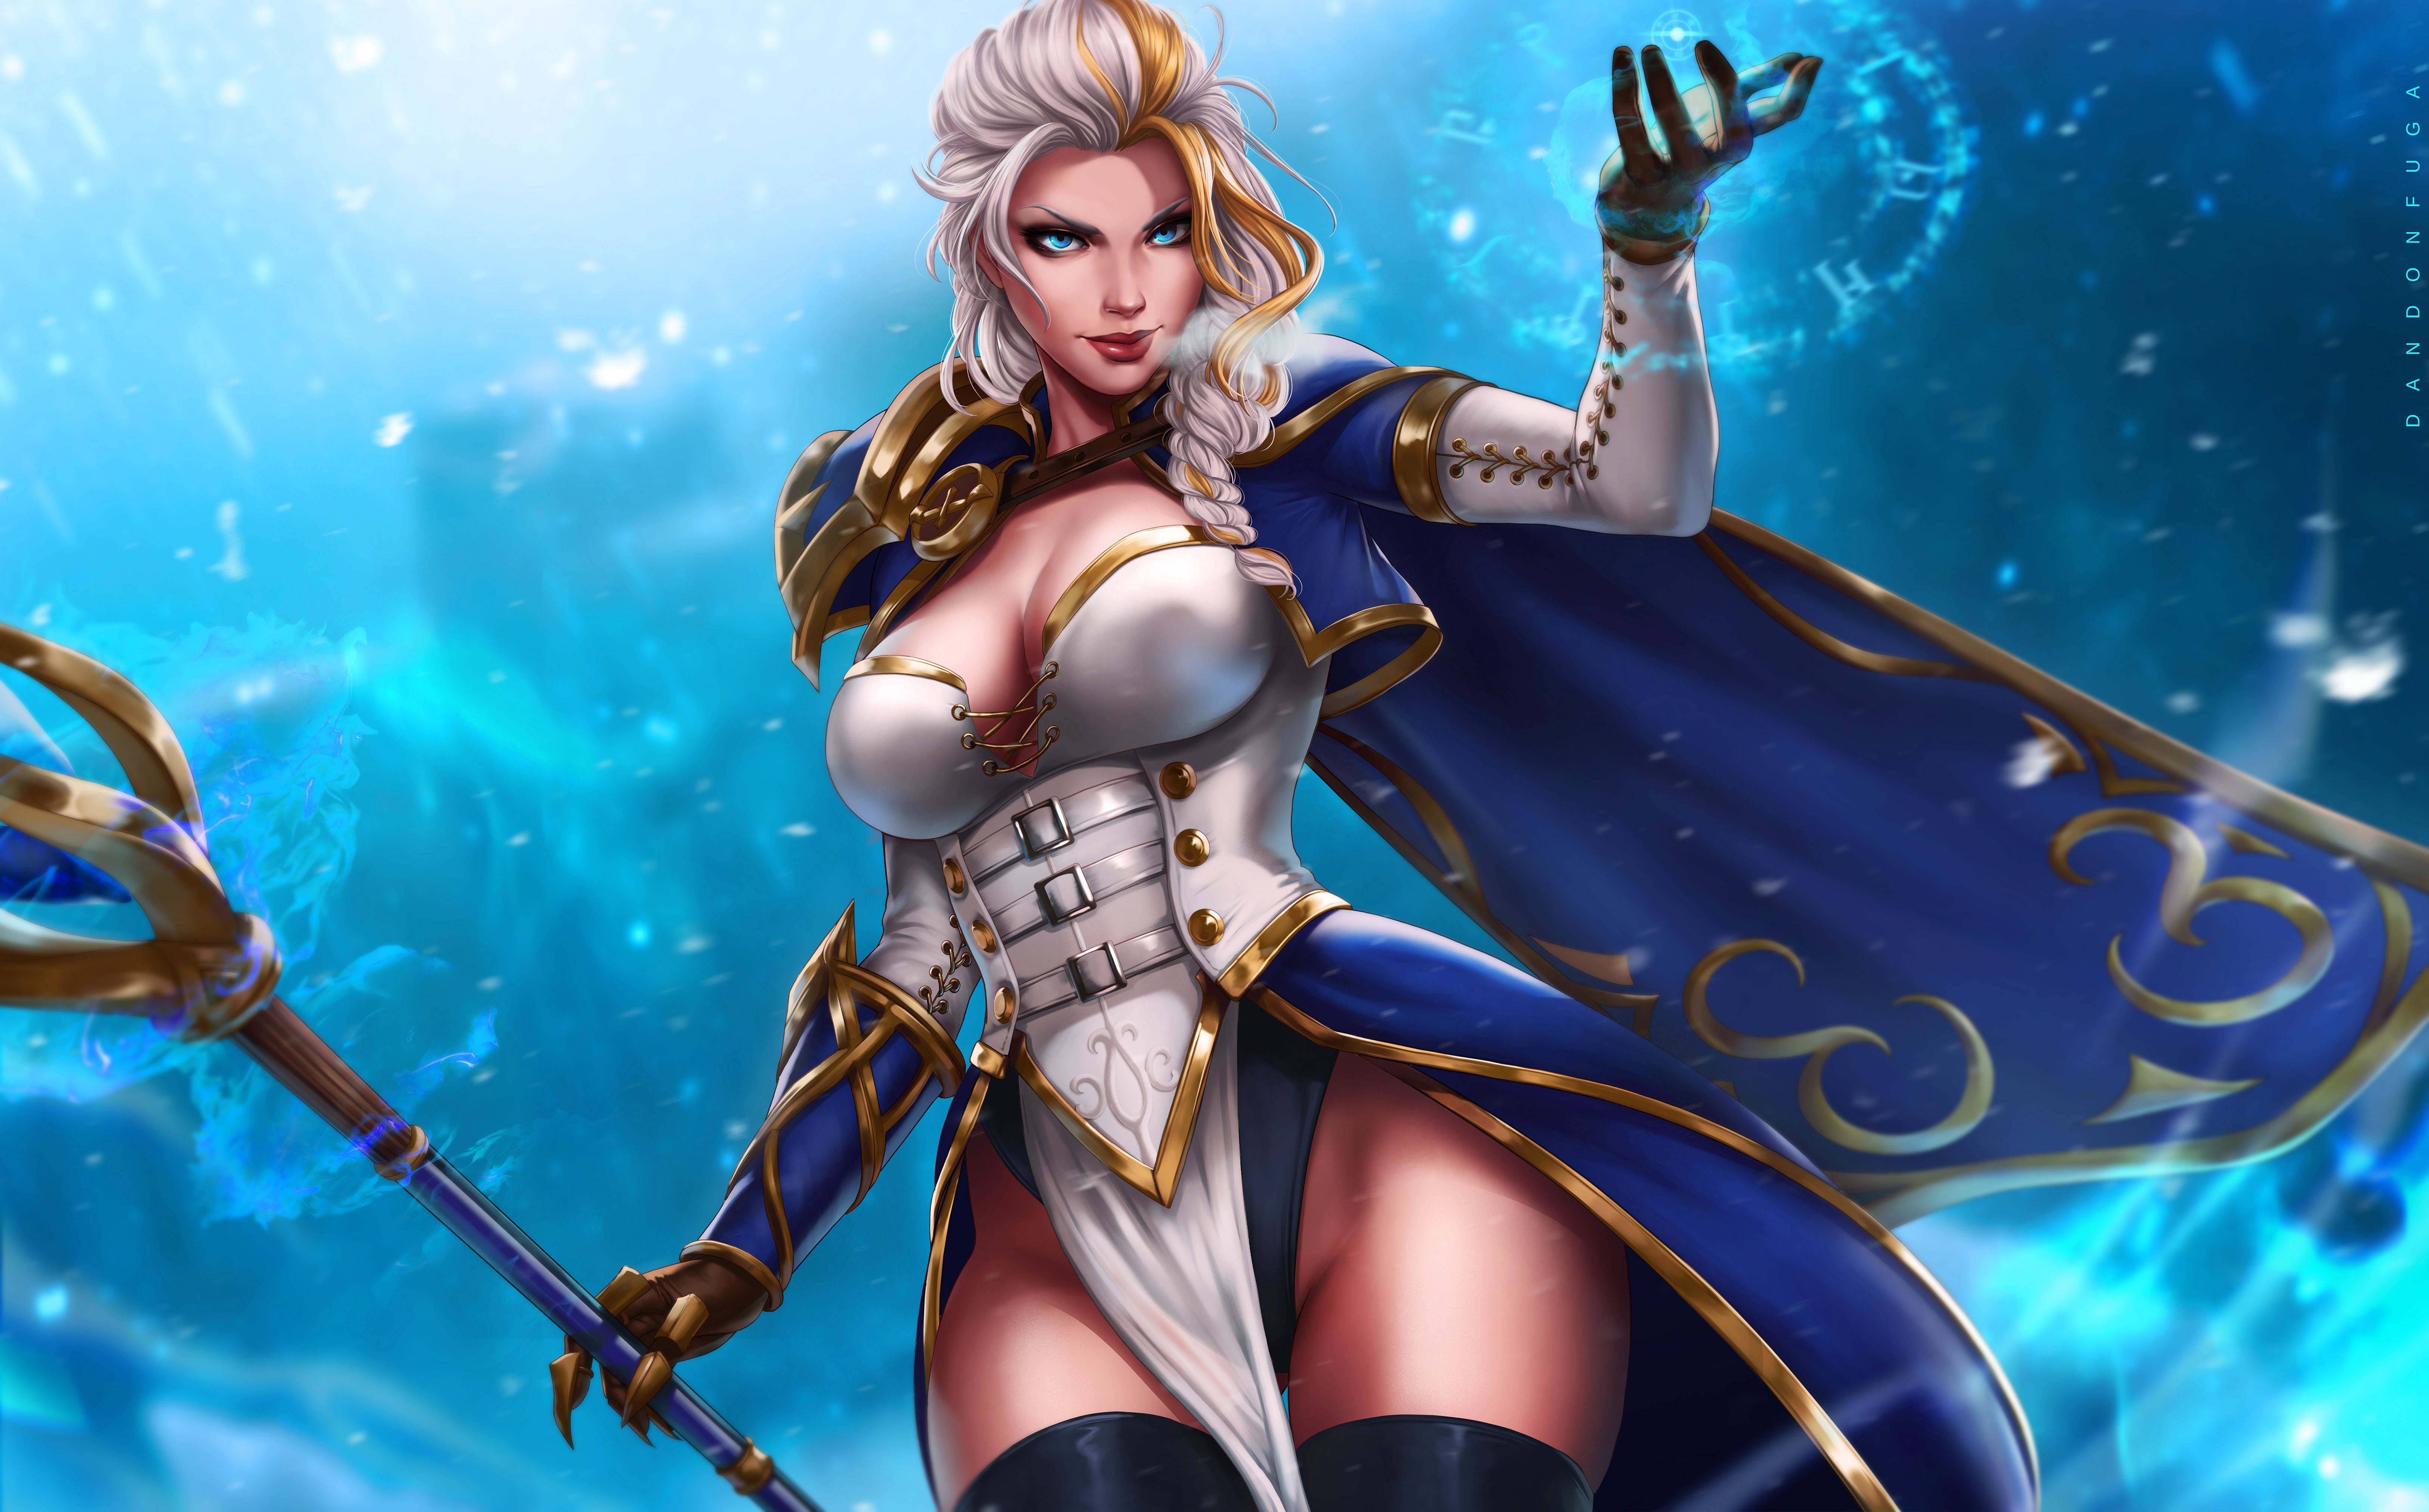 General 6500x4046 big boobs Jaina Proudmoore fantasy girl World of Warcraft fan art fantasy art PC gaming video game warriors Dandonfuga digital art